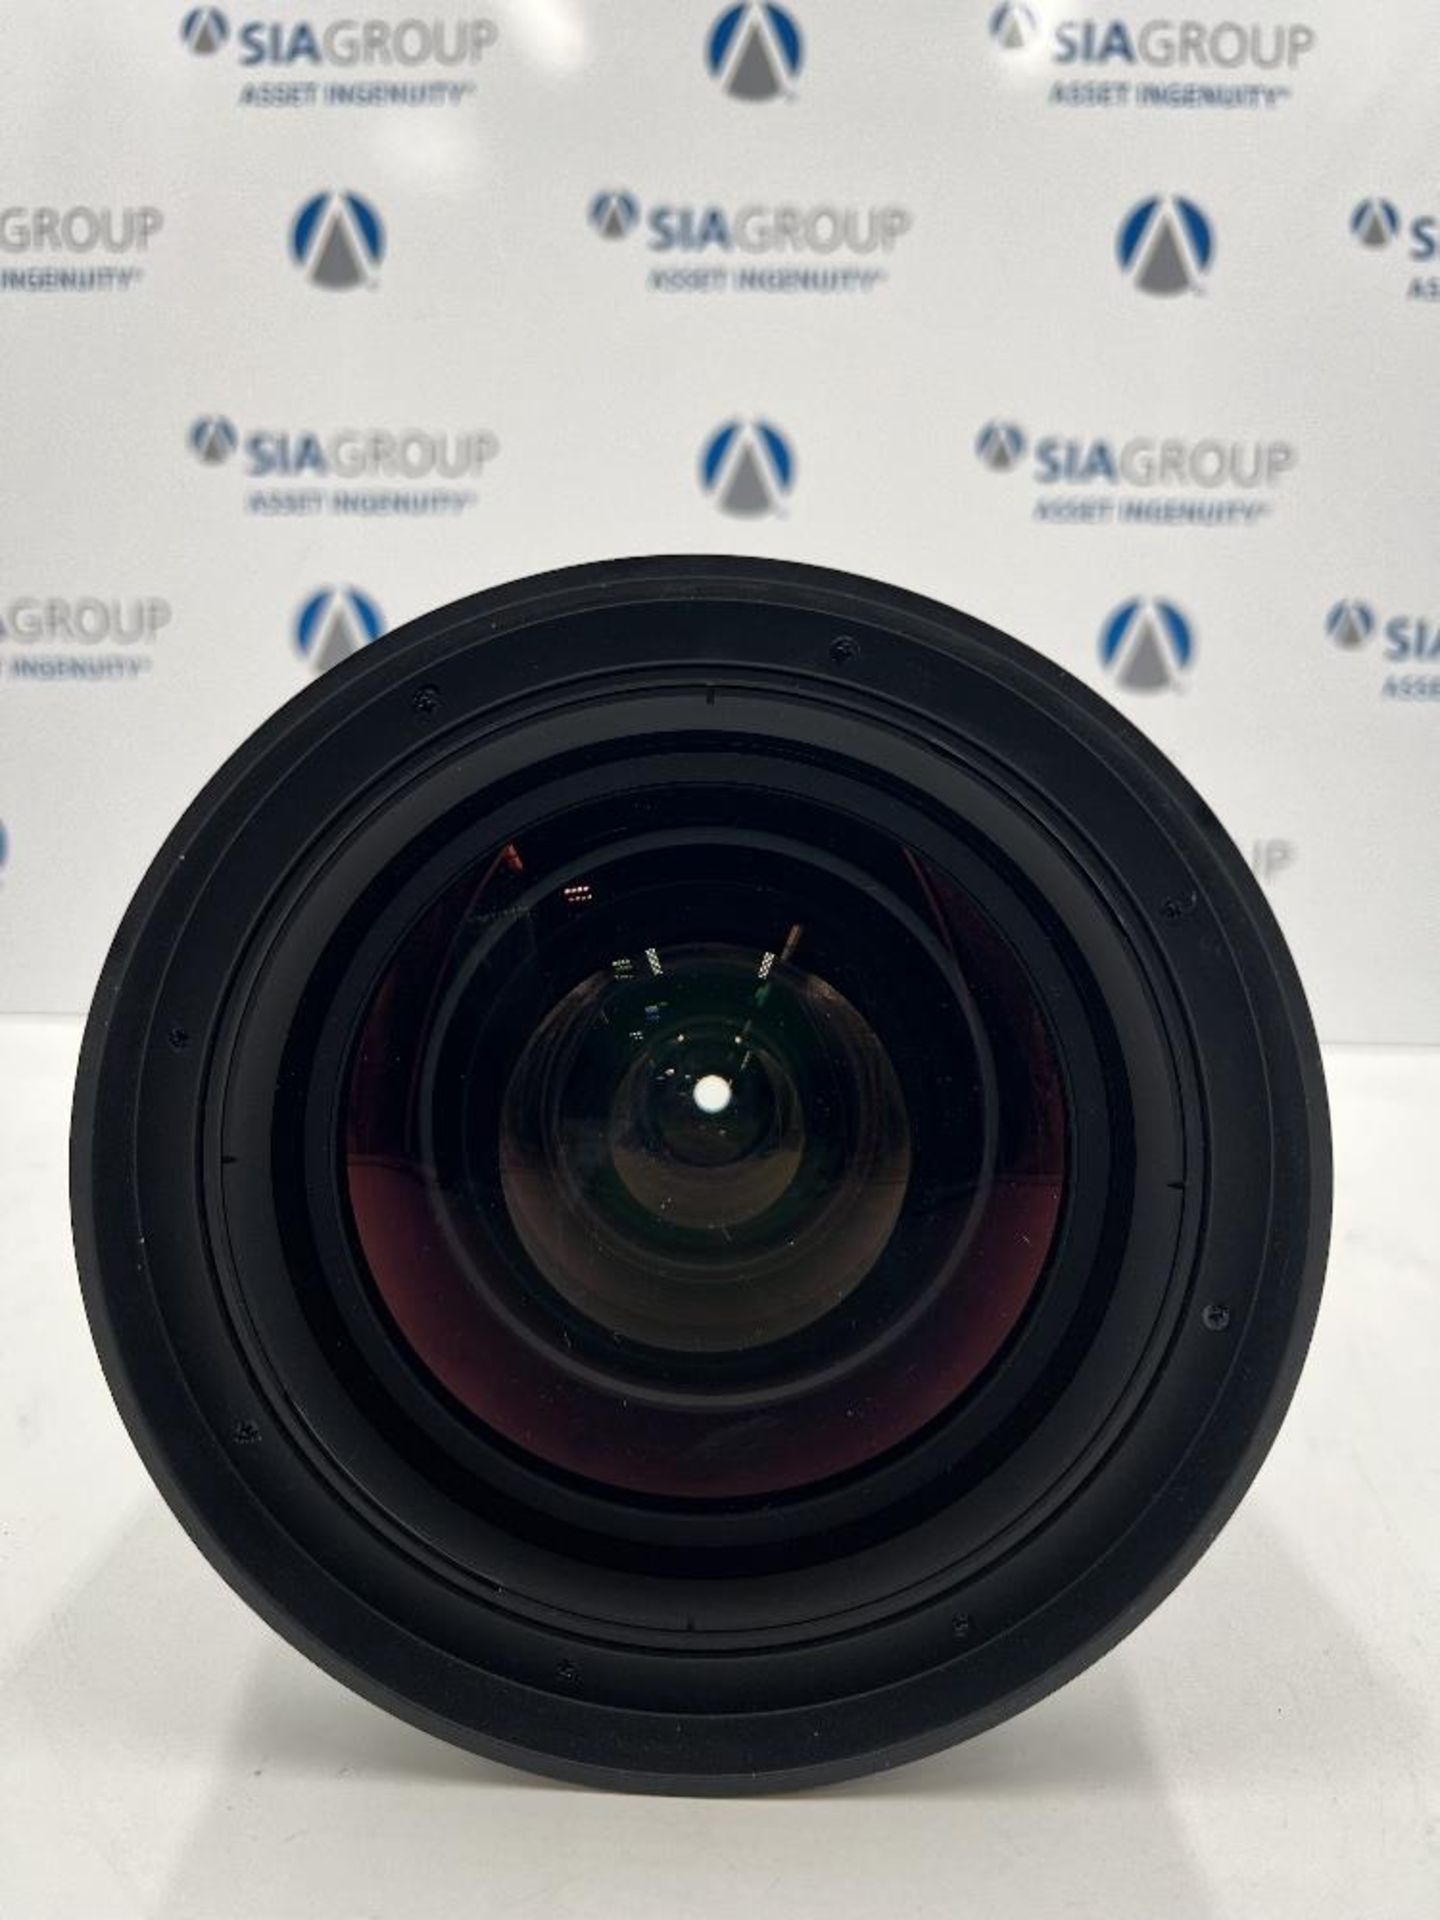 Christie DP Lens 0.67 With Peli Case - Image 3 of 8